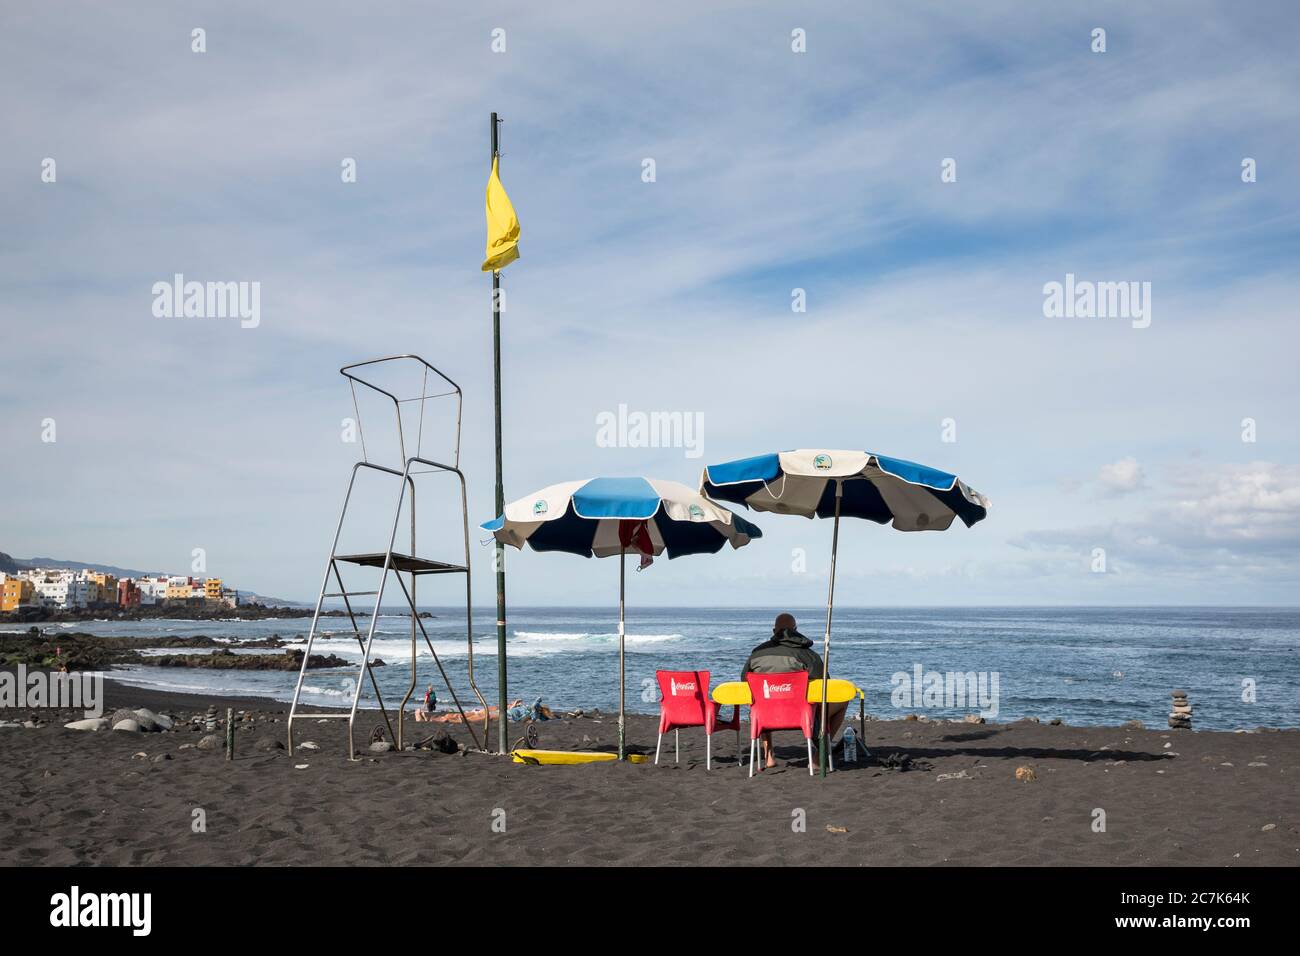 Lifesaver on Playa Jardin beach, Puerto de la Cruz, Tenerife, Canary Islands, Spain Stock Photo